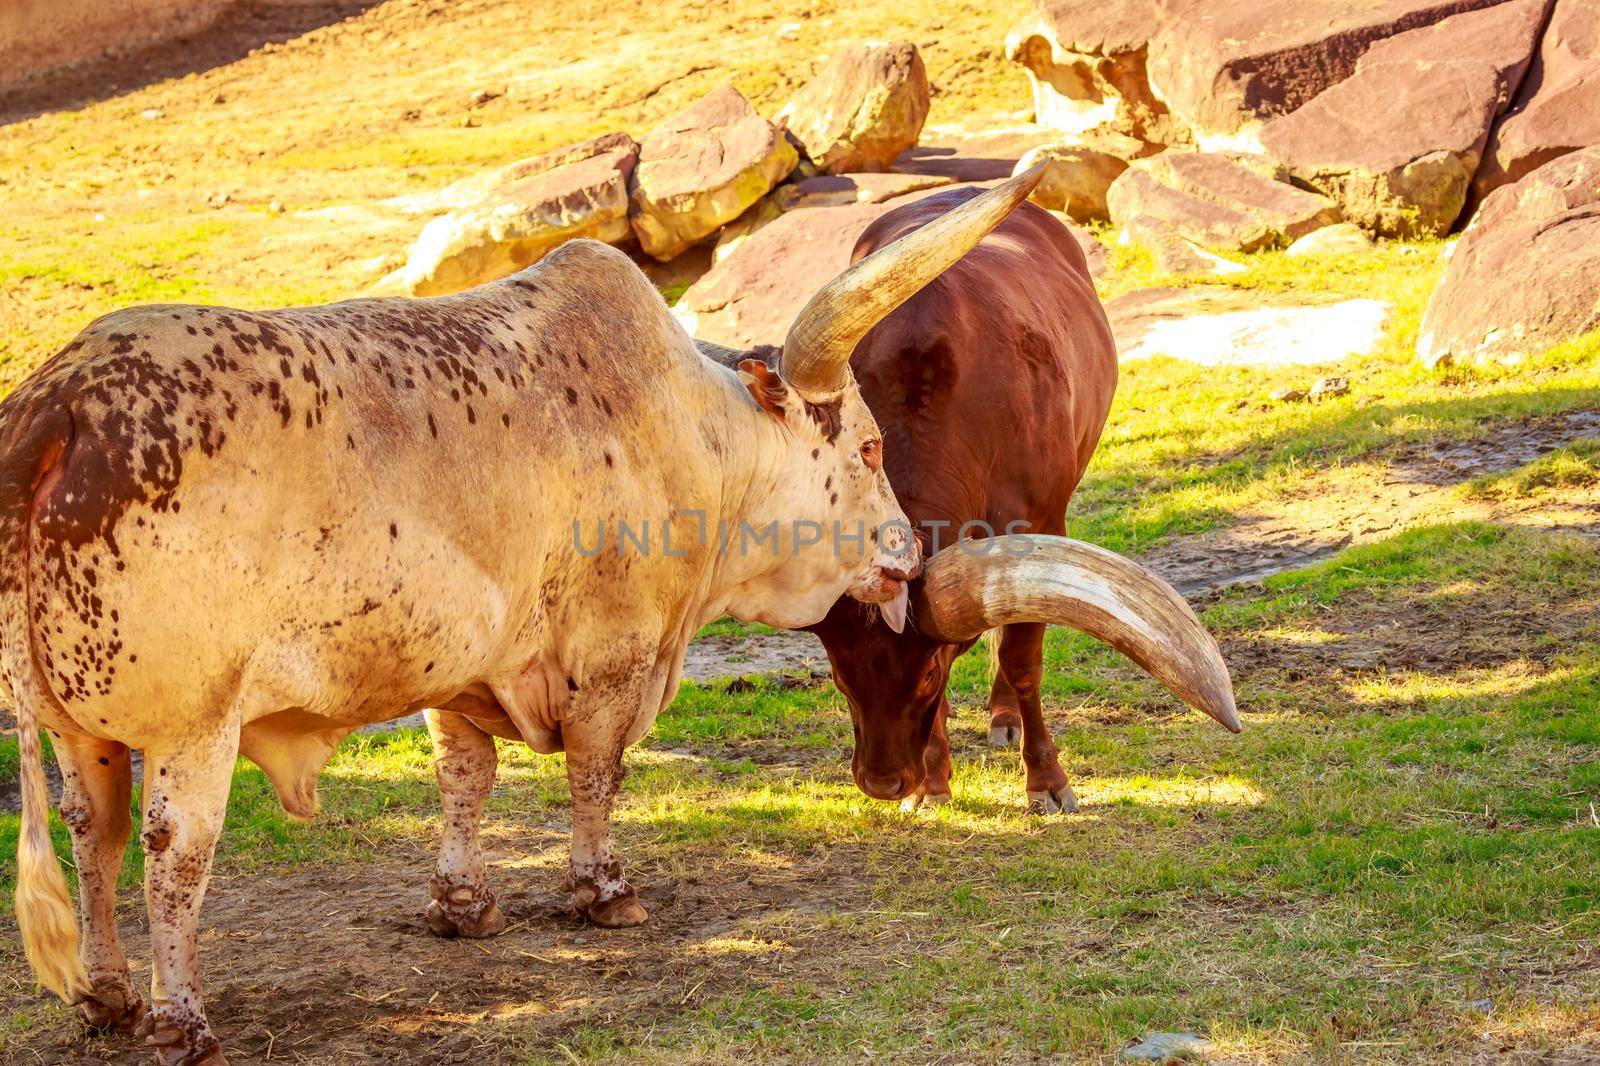 Ankole cattle heads-up by gepeng